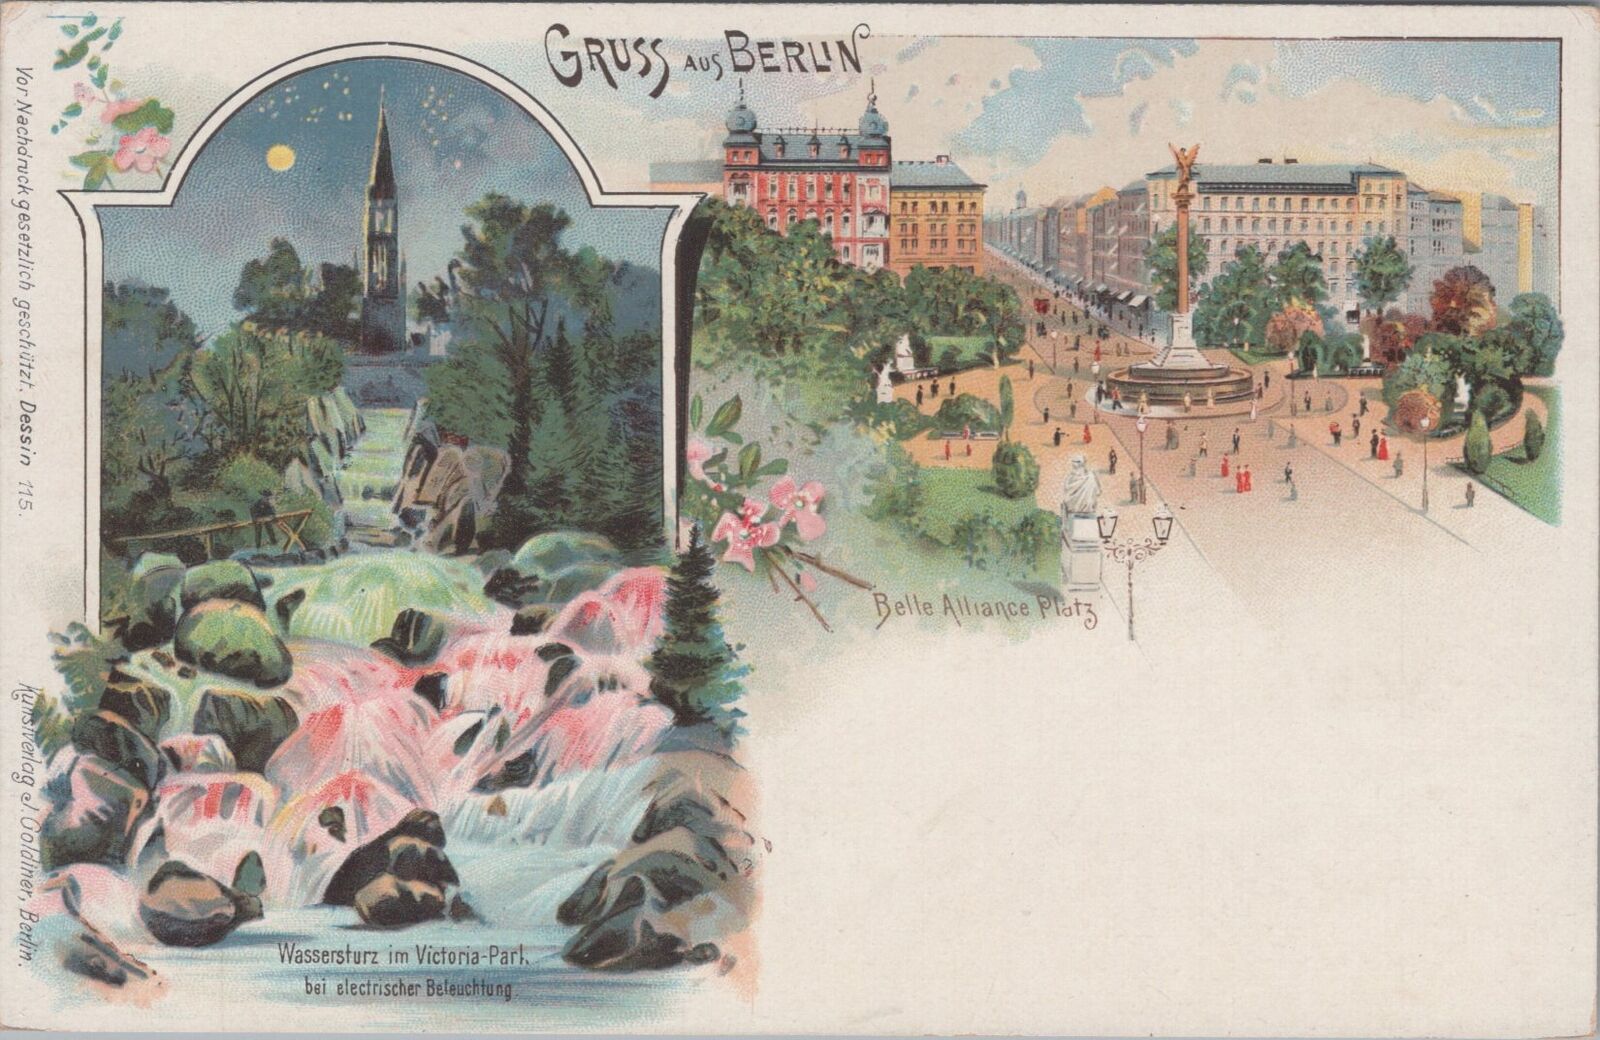 Scenic Belle Alliance Platz Waterfall Victoria Park Gruss Aus Berlin Postcard